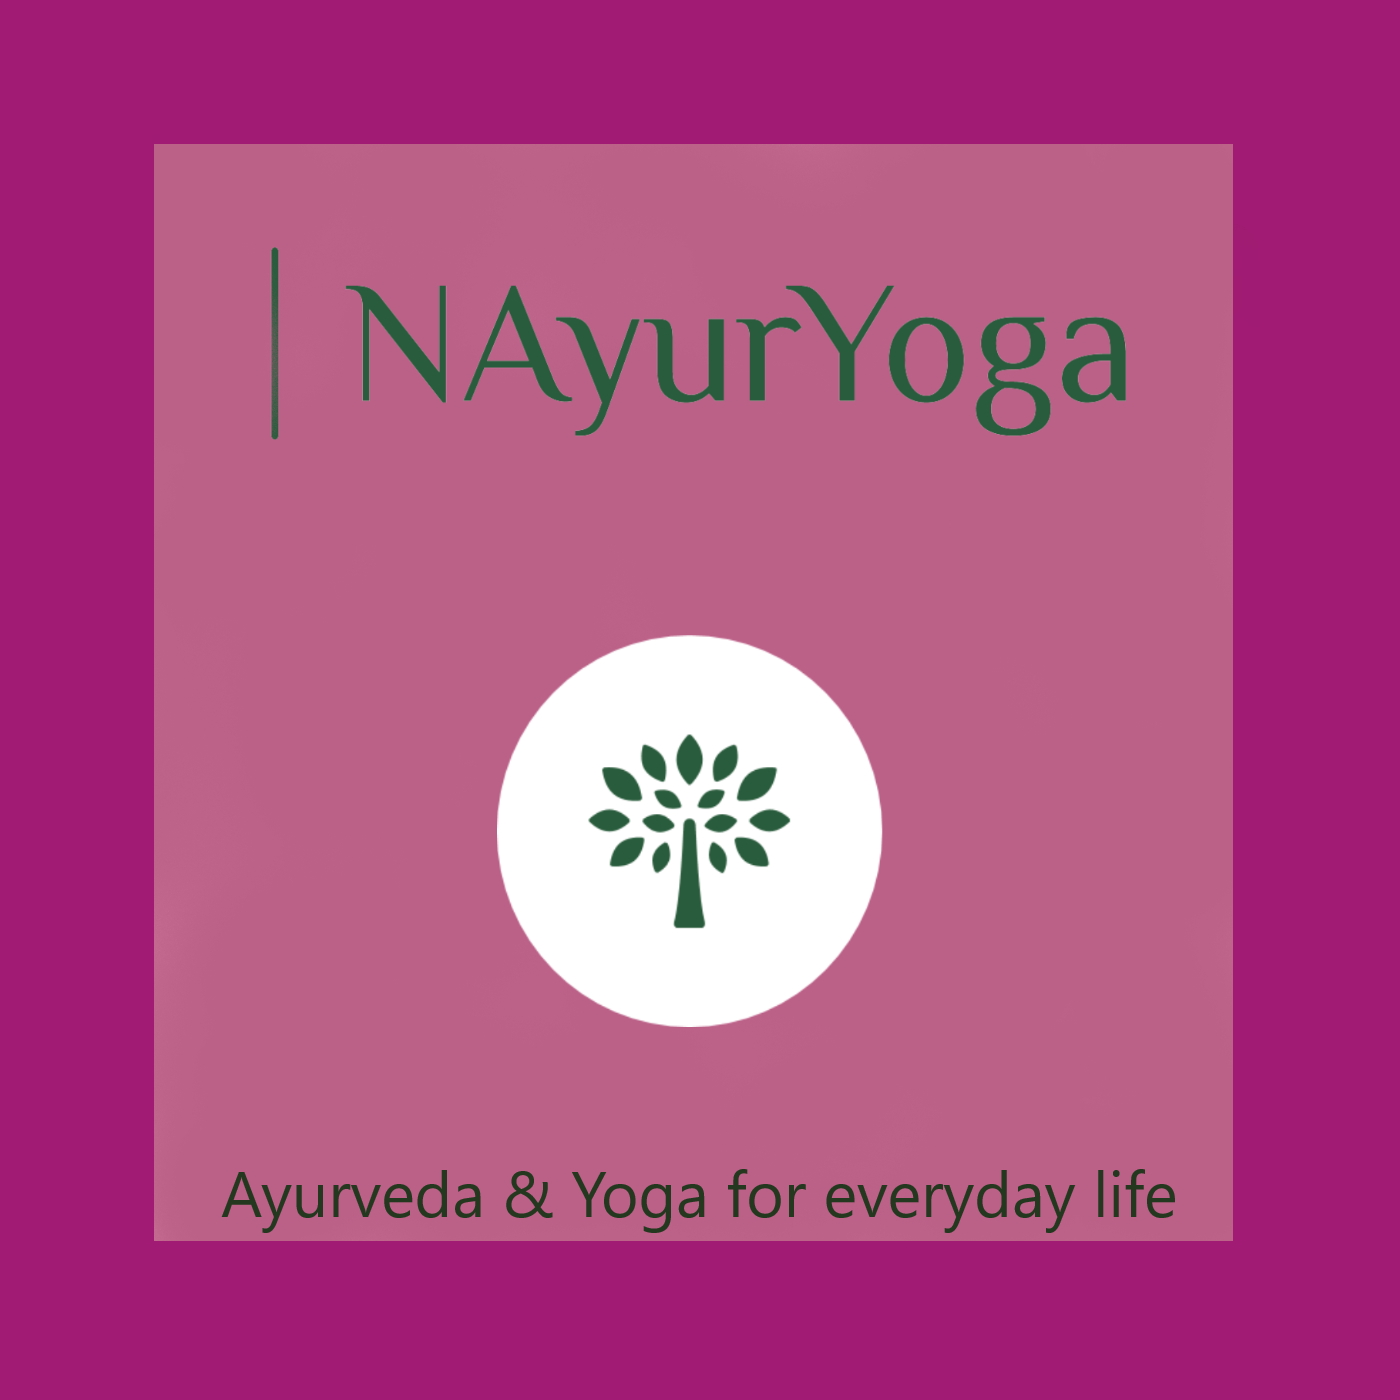 Ayurveda & Yoga in 5 minutes by NAyurYoga